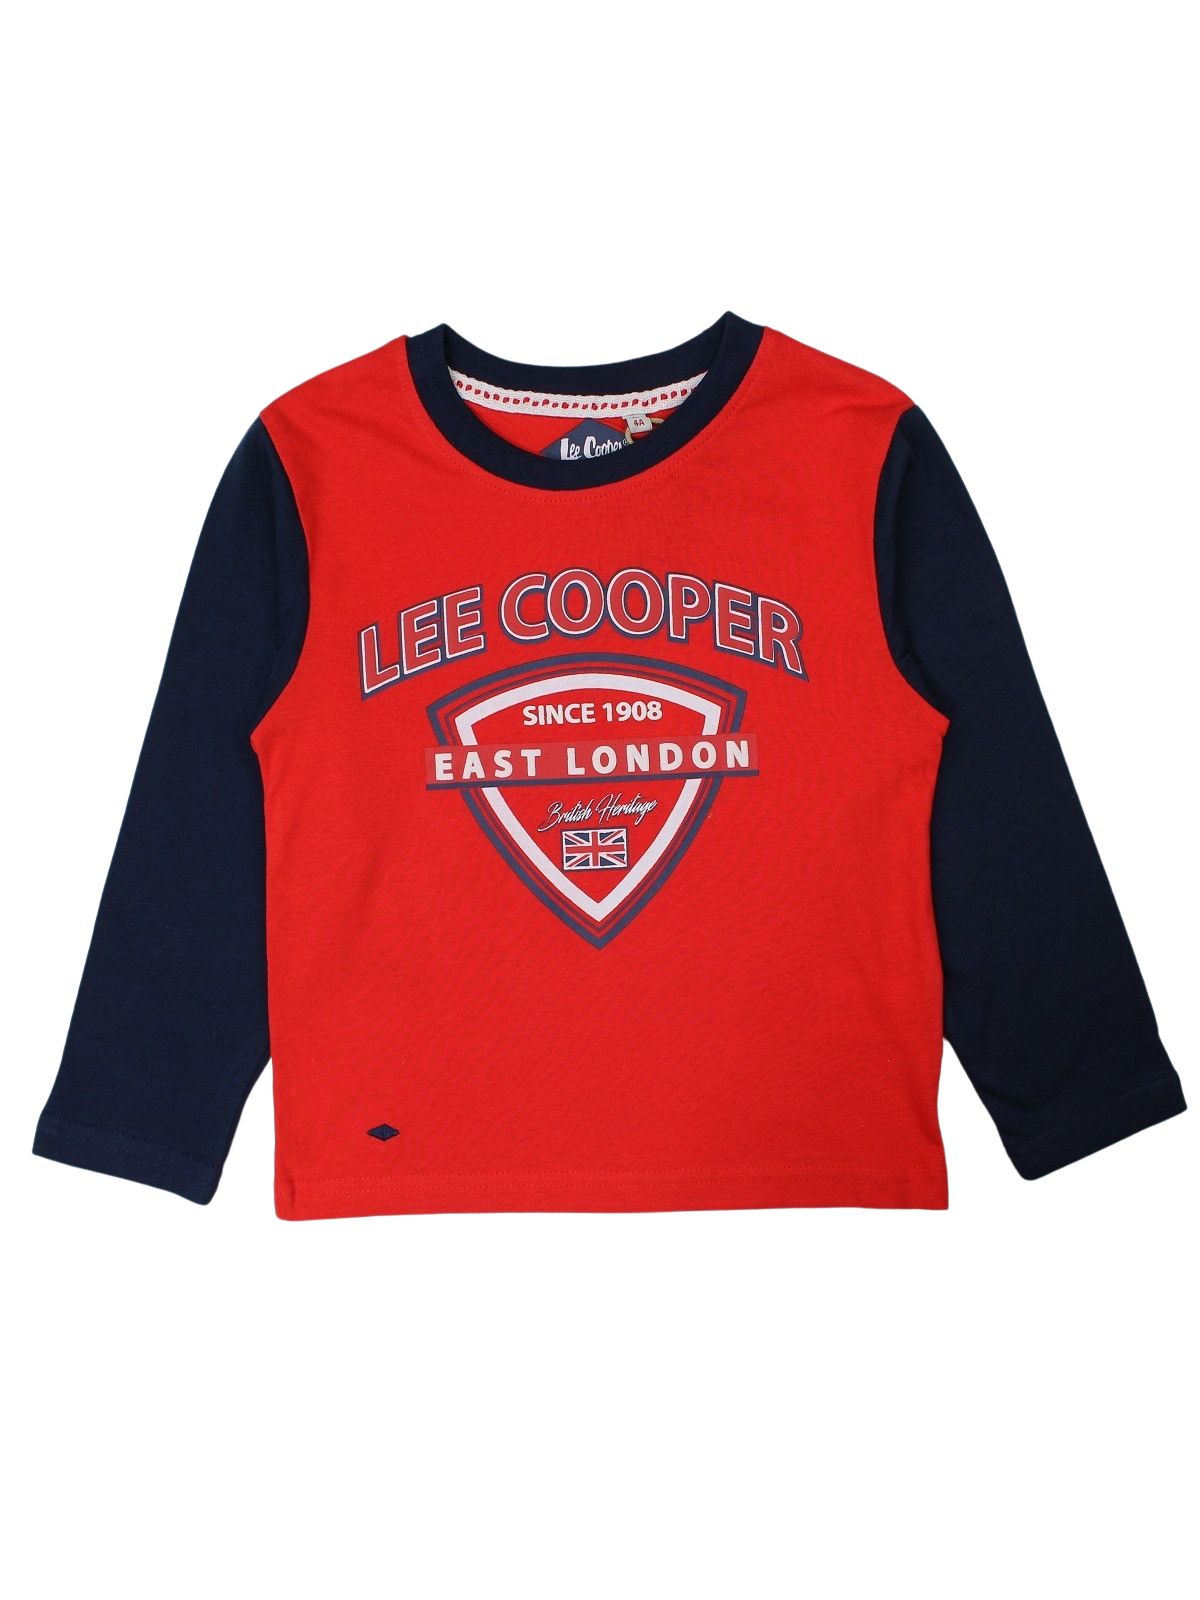 Pyjama coton Lee Cooper